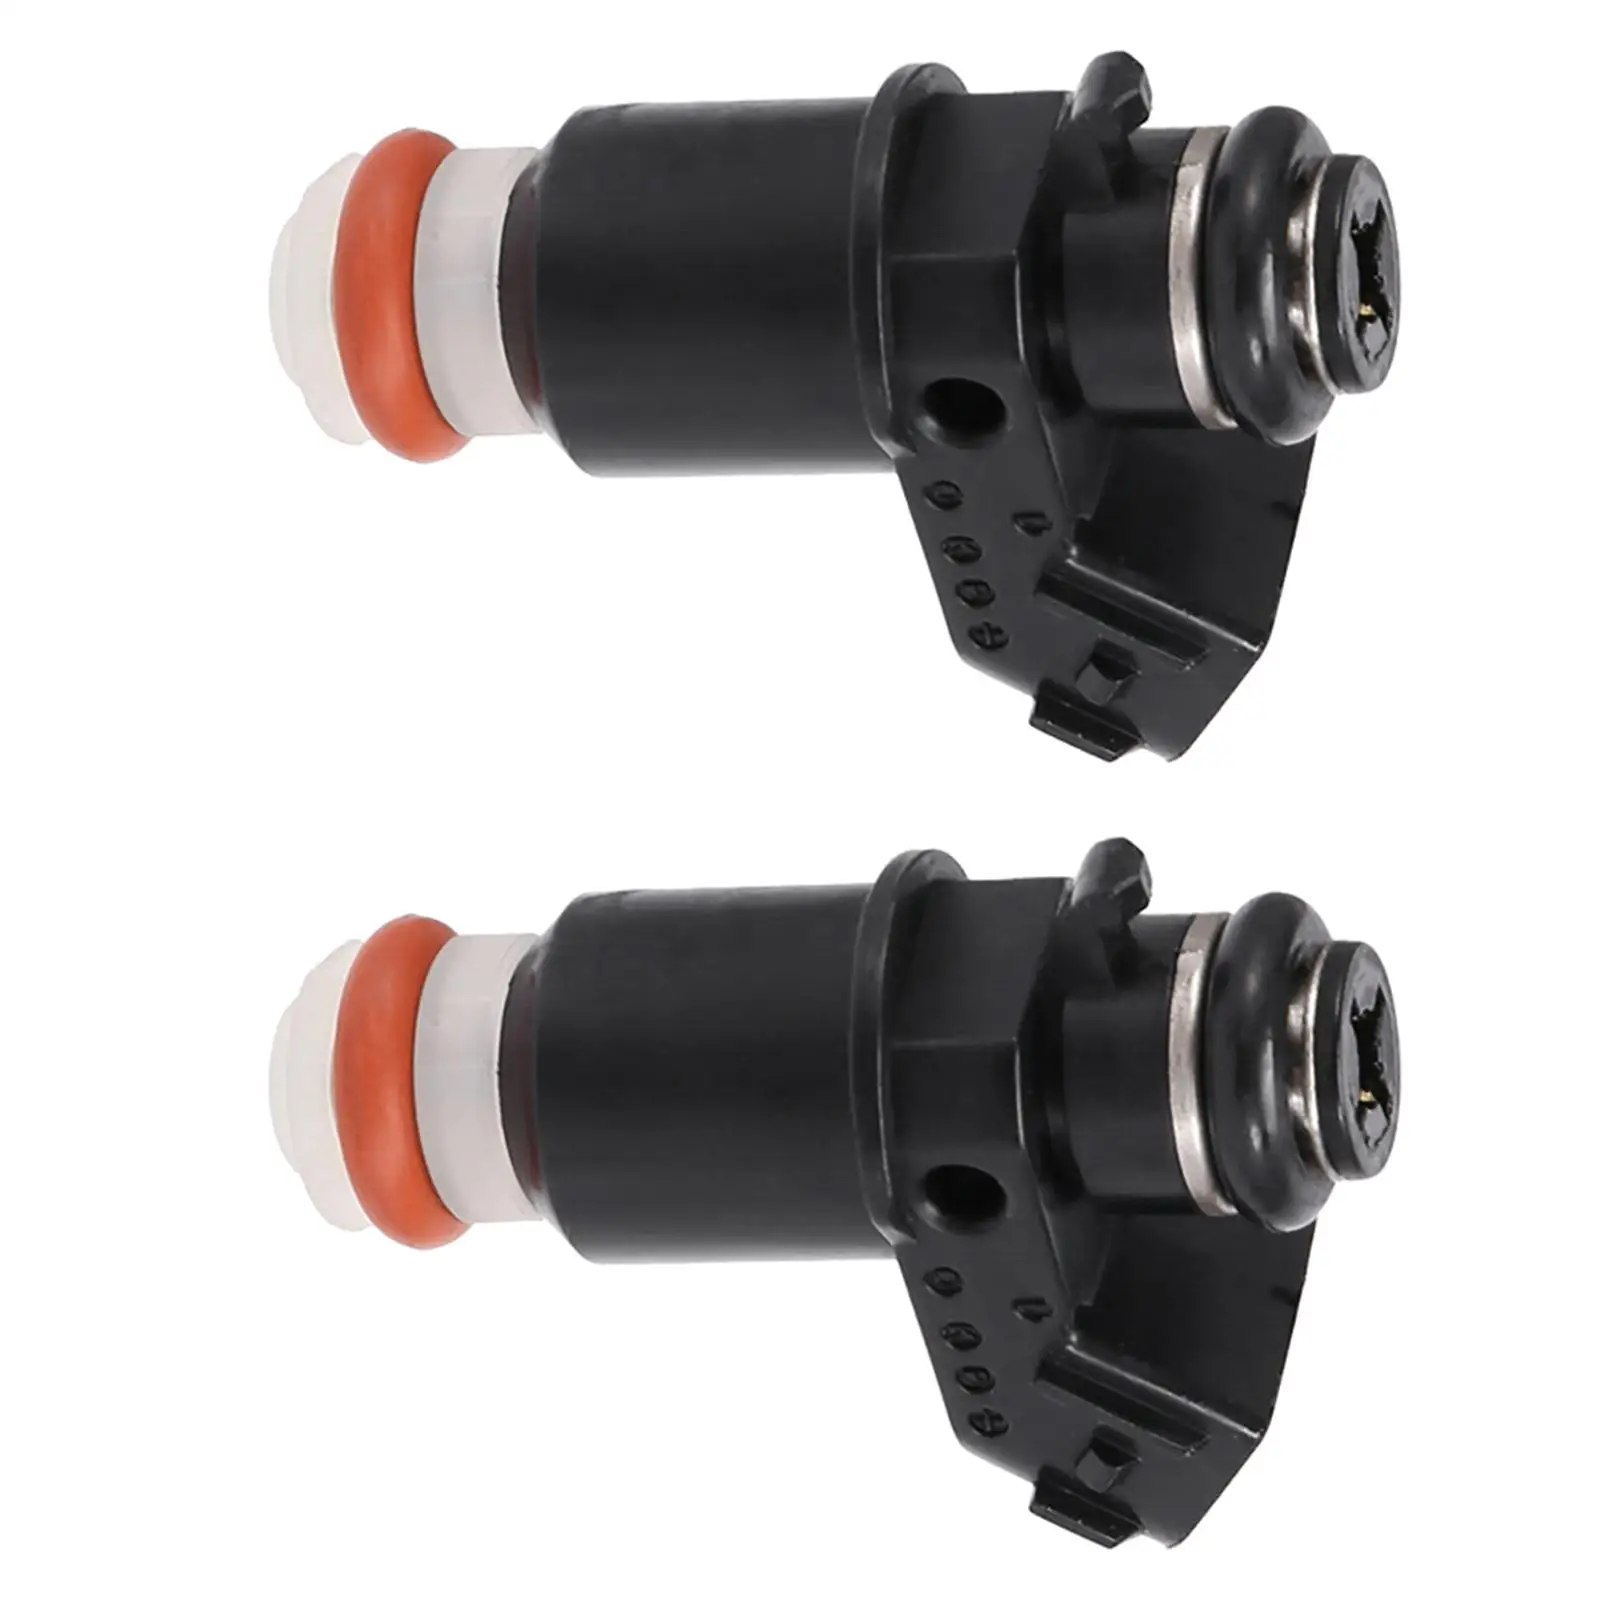 2x Fuel Injector Nozzles for Suzuki Boulevard M50 C50 S50 S40 M90